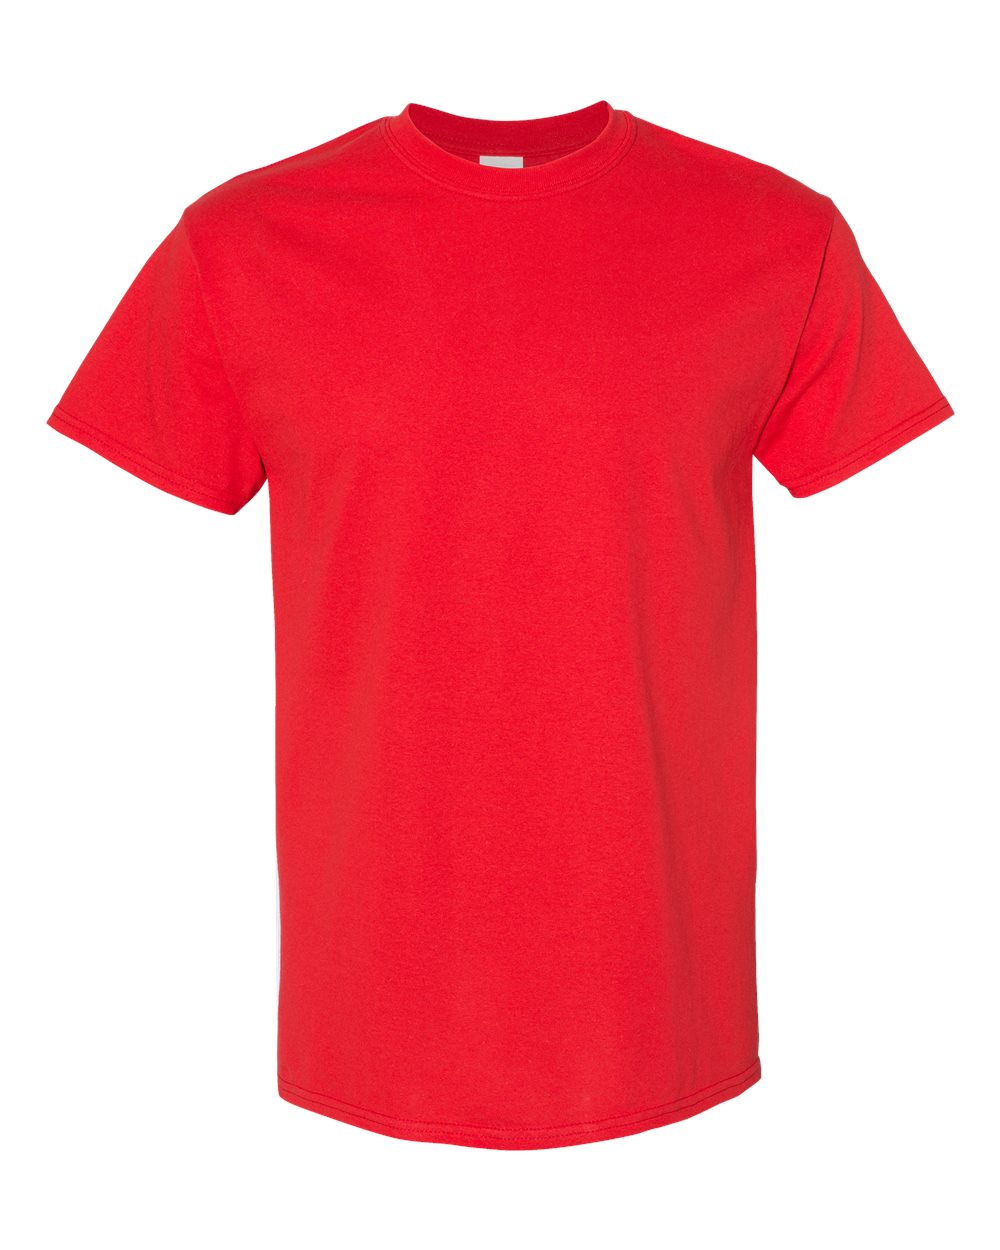 Unisex Short Sleeve Cotton T-shirt 5000